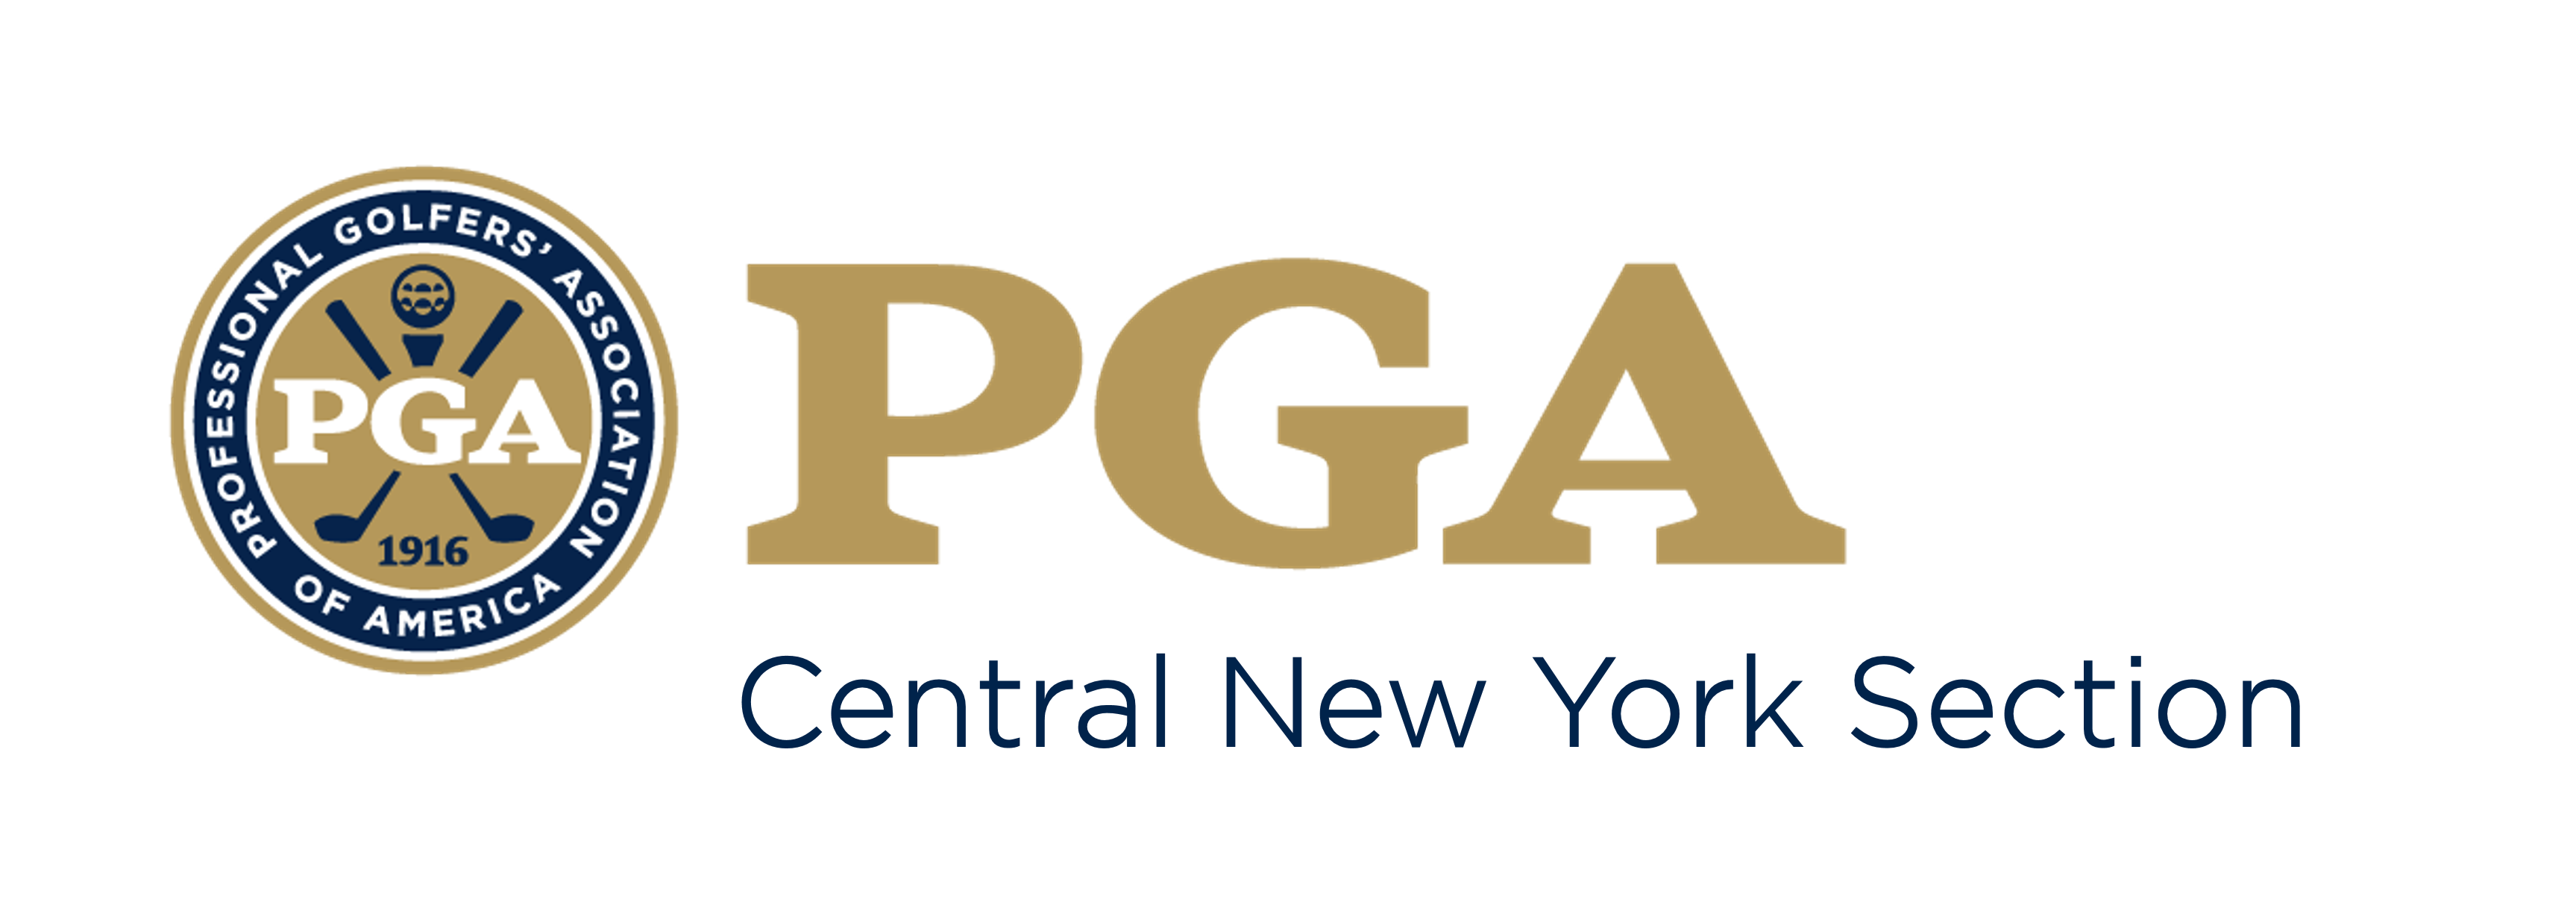 Central New York PGA Hole In One Program